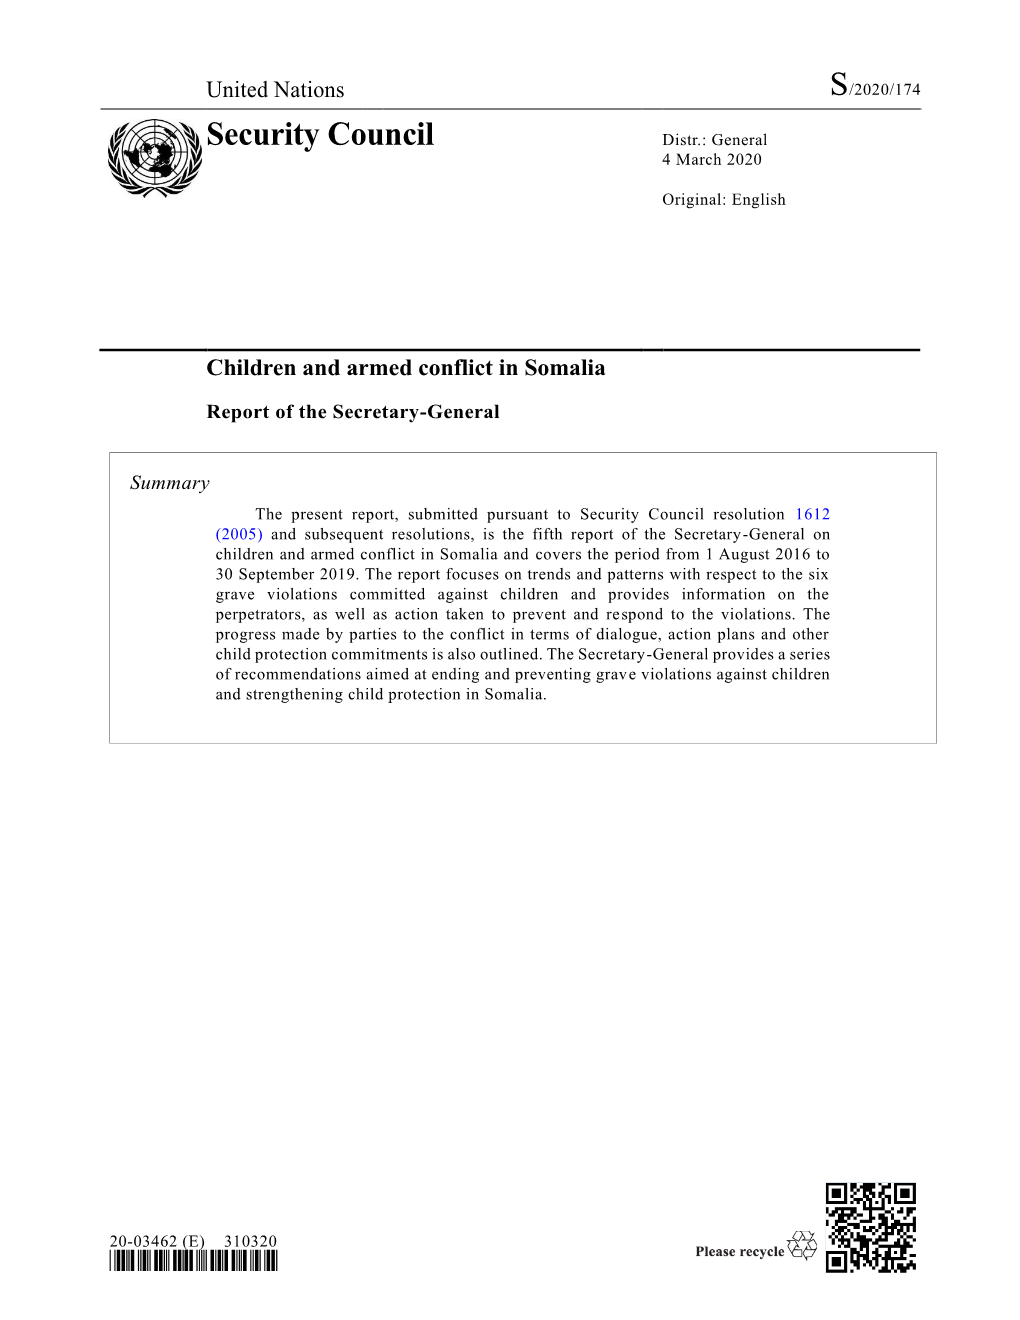 Security Council Distr.: General 4 March 2020